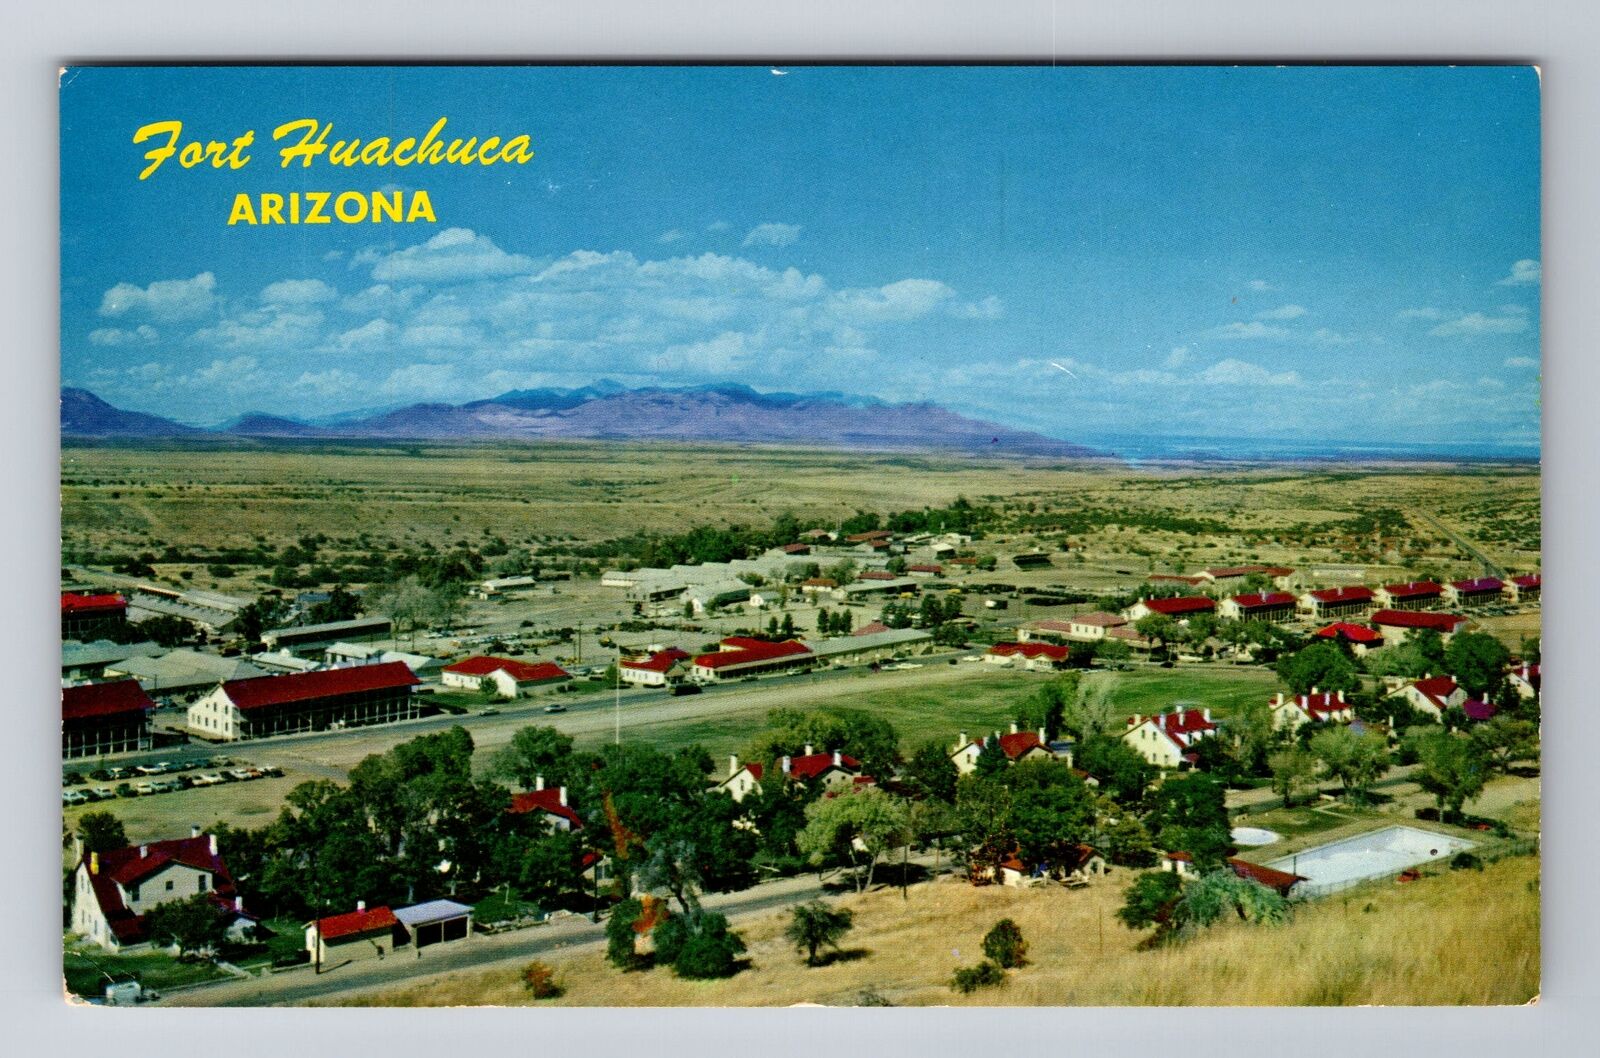 Fort Huachuca AZ-Arizona, US Army Electronic Proving Ground, Vintage Postcard